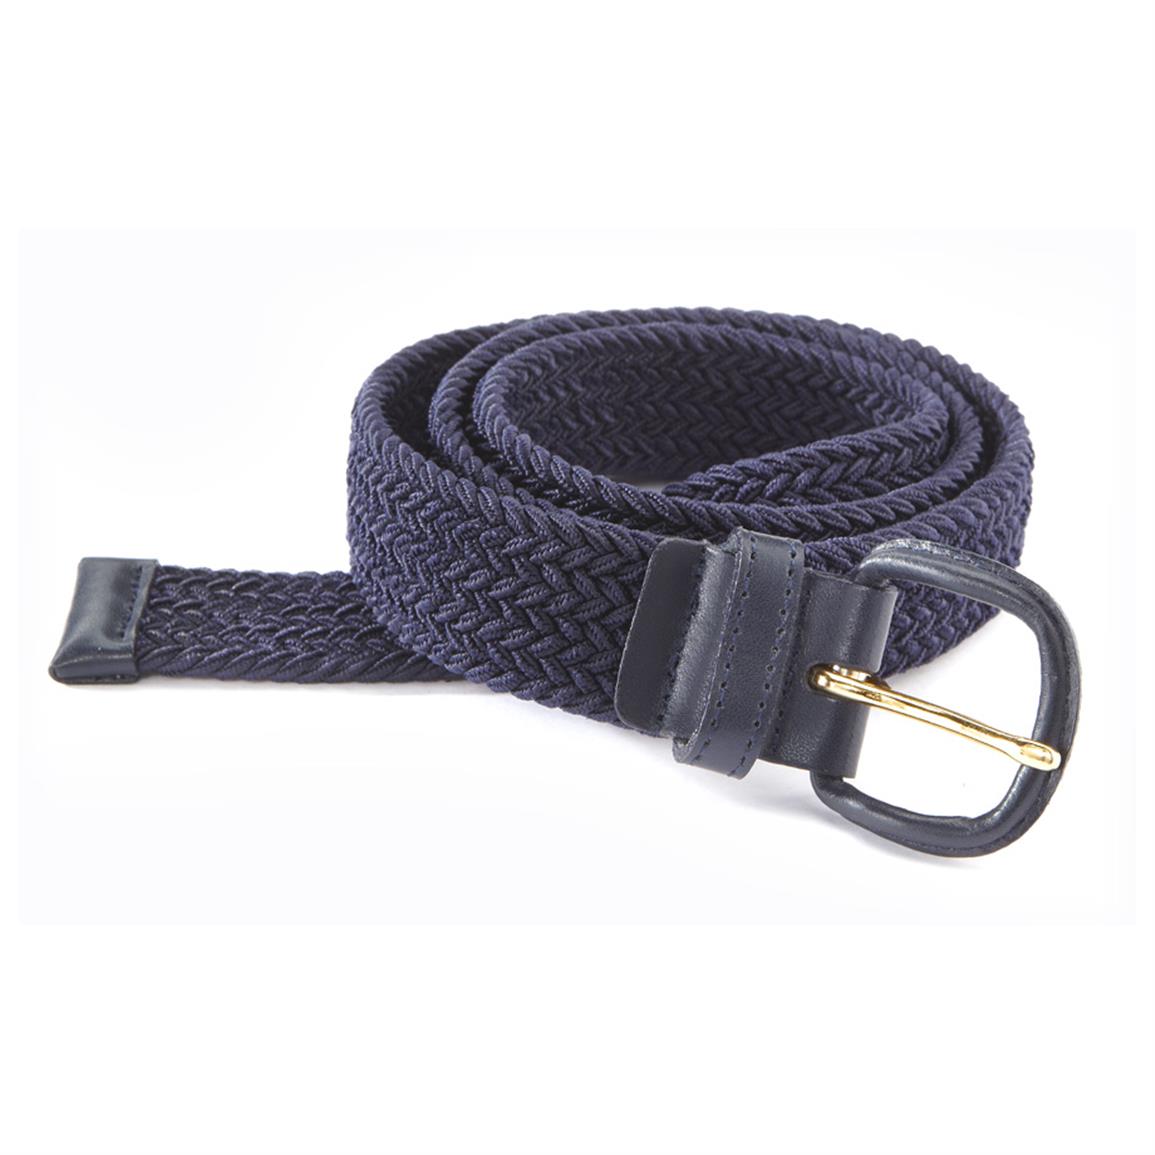 Aquarius Elastic Belt - 625860, Belts & Suspenders at Sportsman's Guide